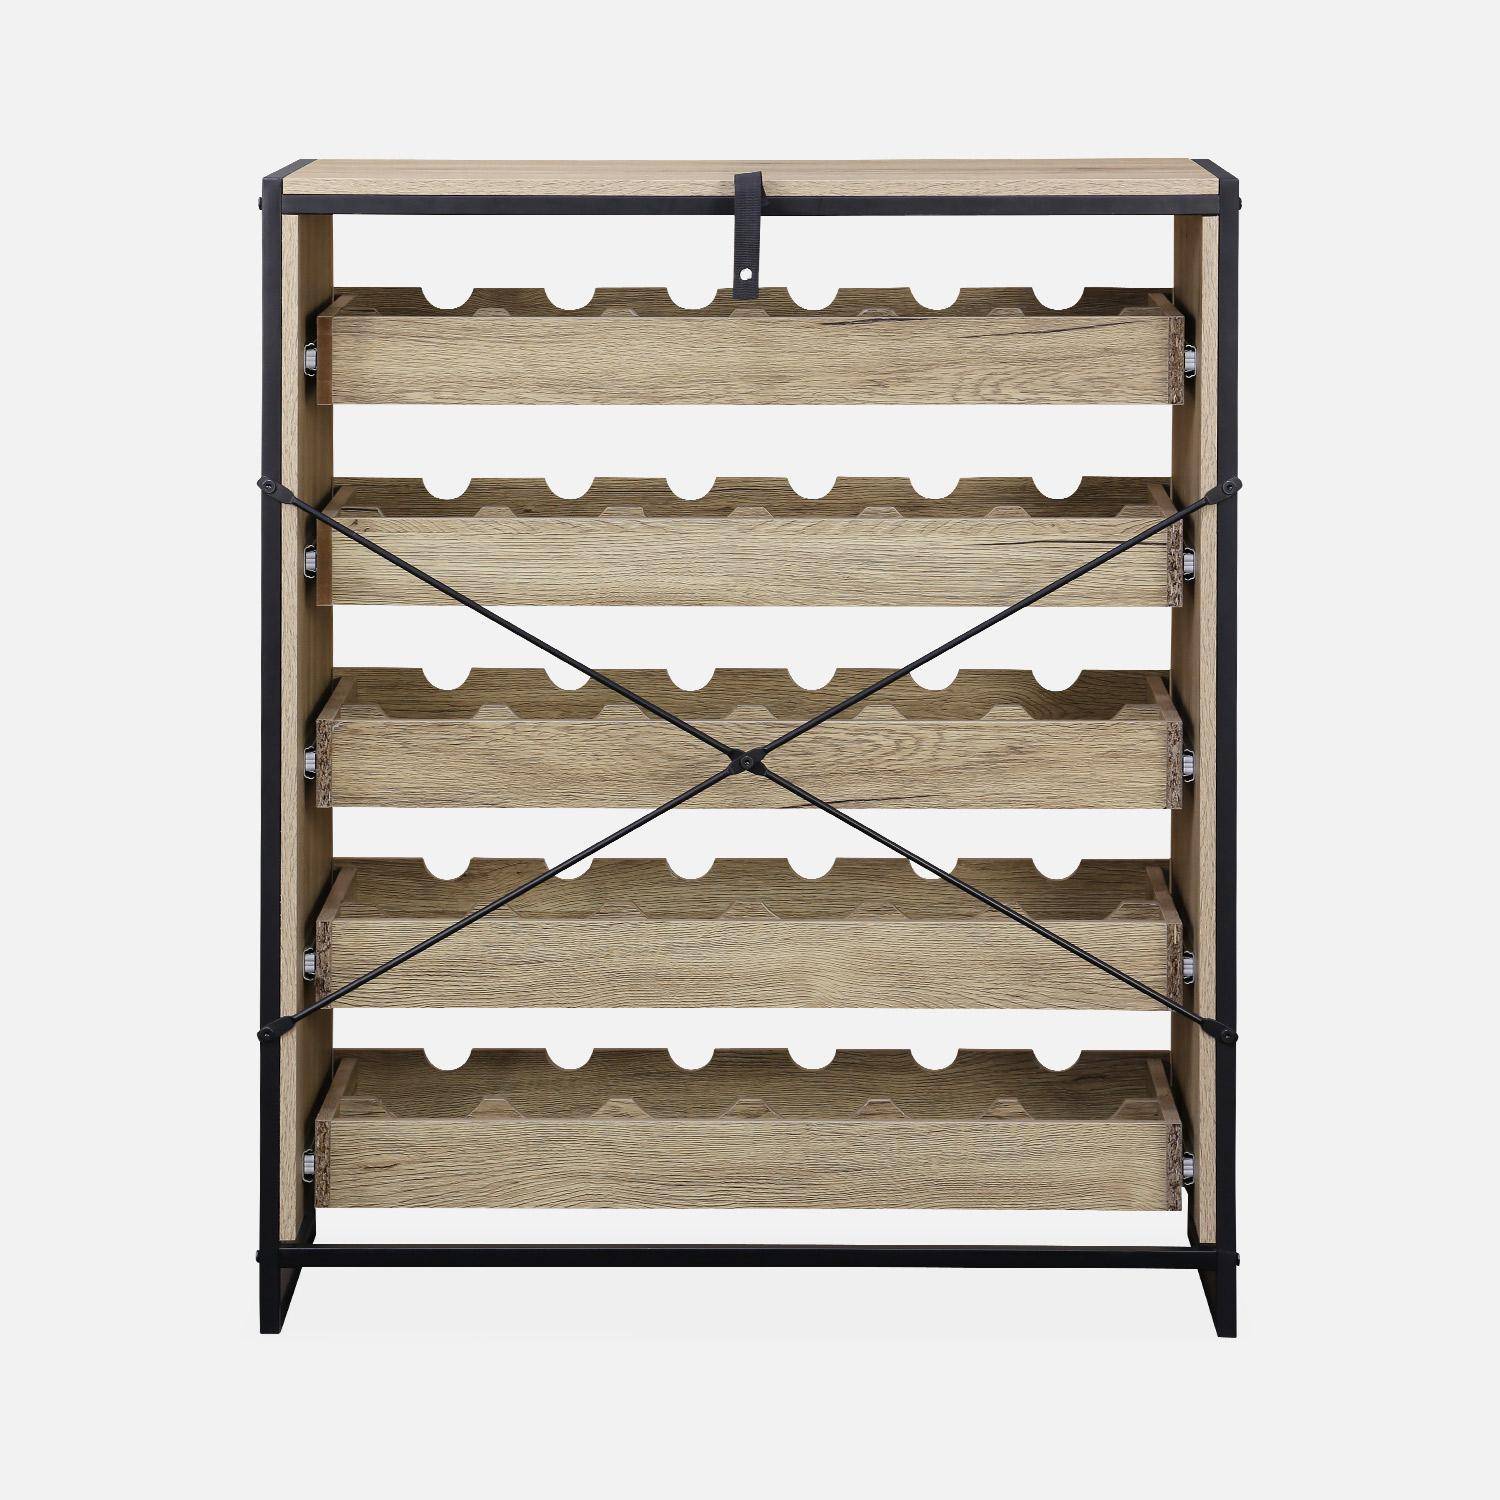 Metal and wood-effect wine rack with 5 shelves, 75x40x90cm - Loft,sweeek,Photo6